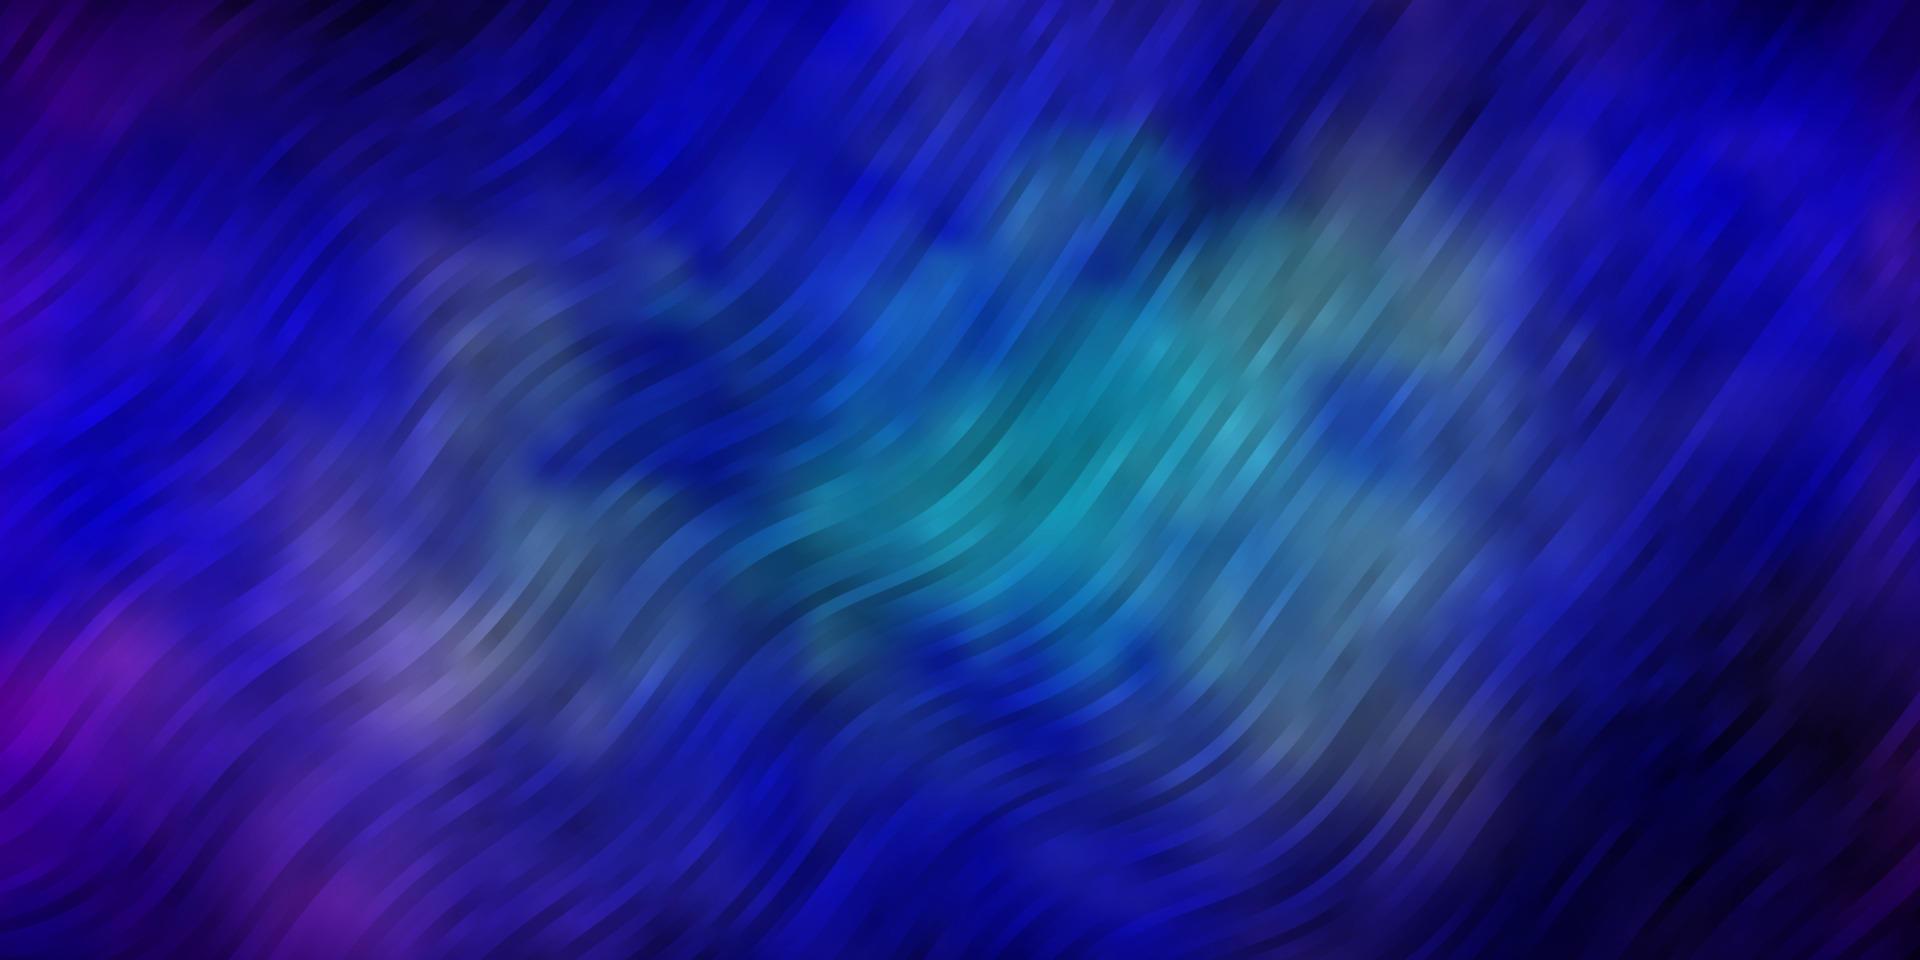 mörkrosa, blå vektorbakgrund med kurvor. vektor